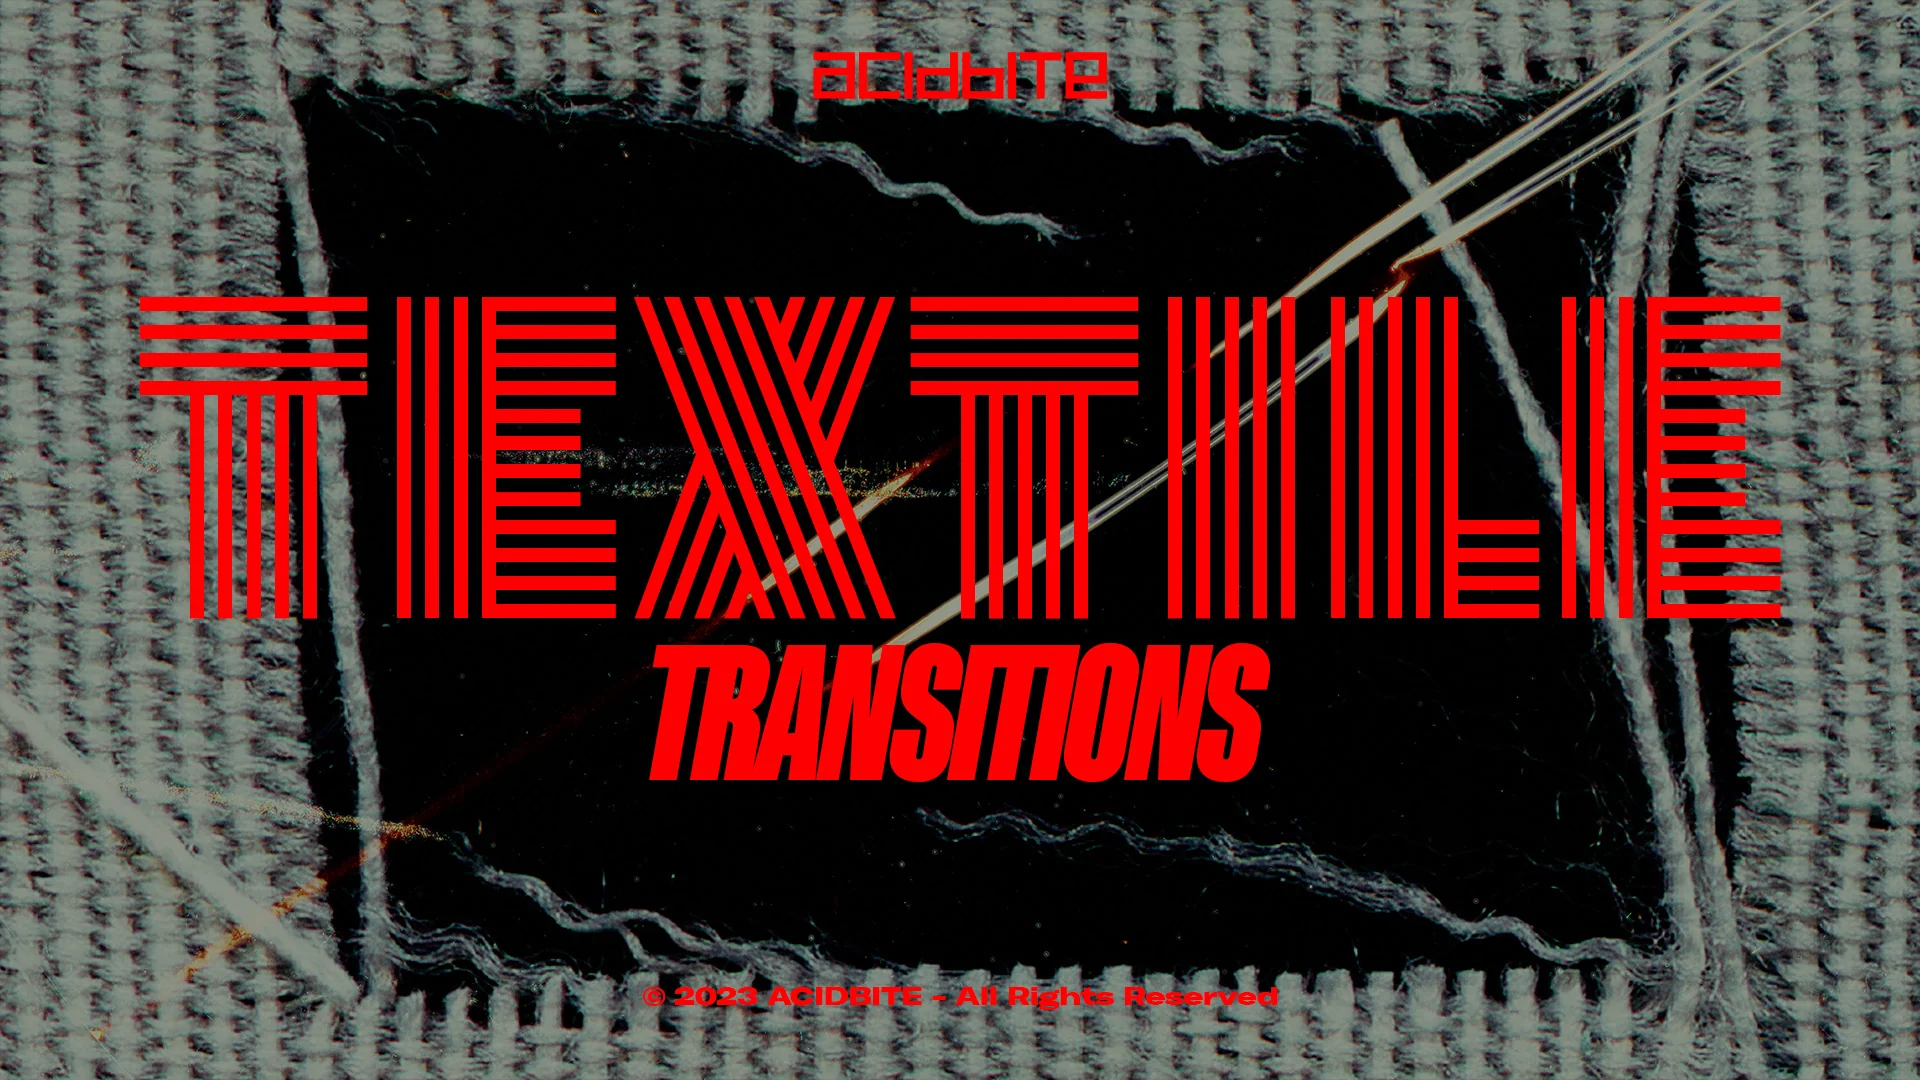 ACIDBITE – Textile Transitions